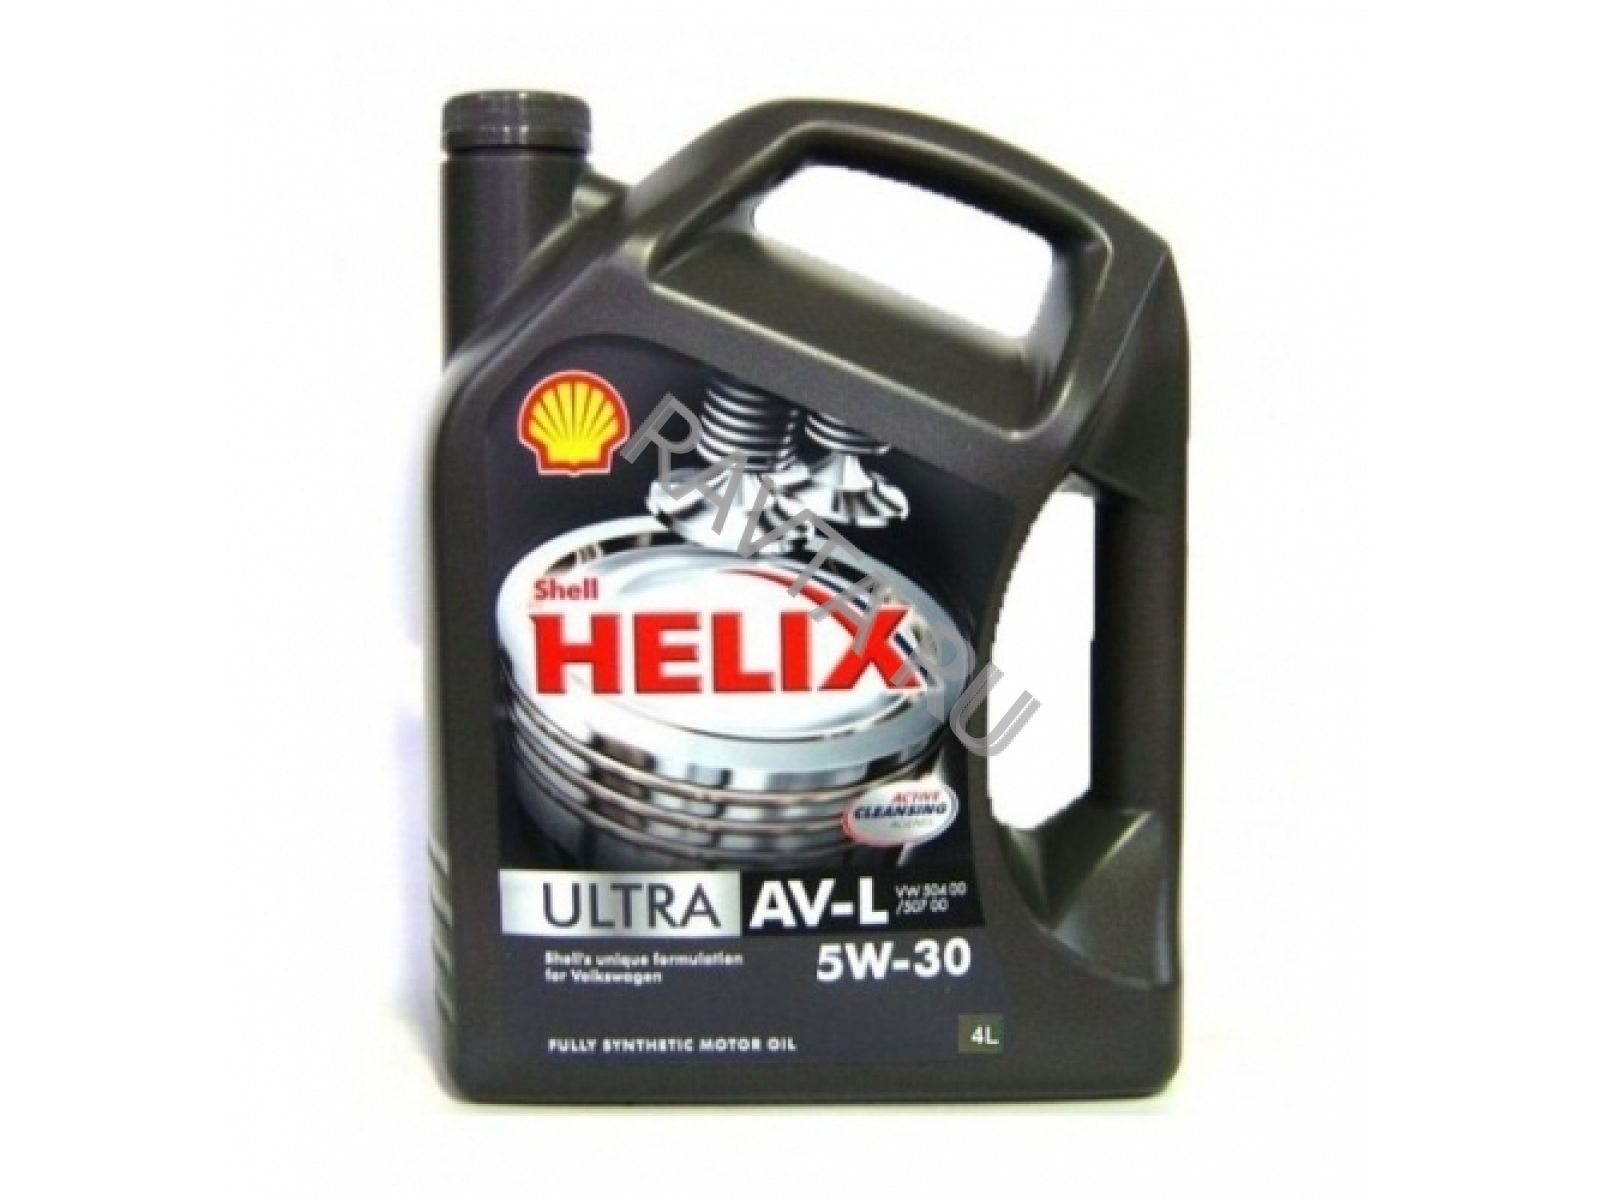 Shell av l. Shell Helix av-l 5w-30. Helix Ultra av-l 5w-30. Моторное масло Shell Helix Ultra av-l 5w-30. Shell Helix Ultra 5w30 5л.